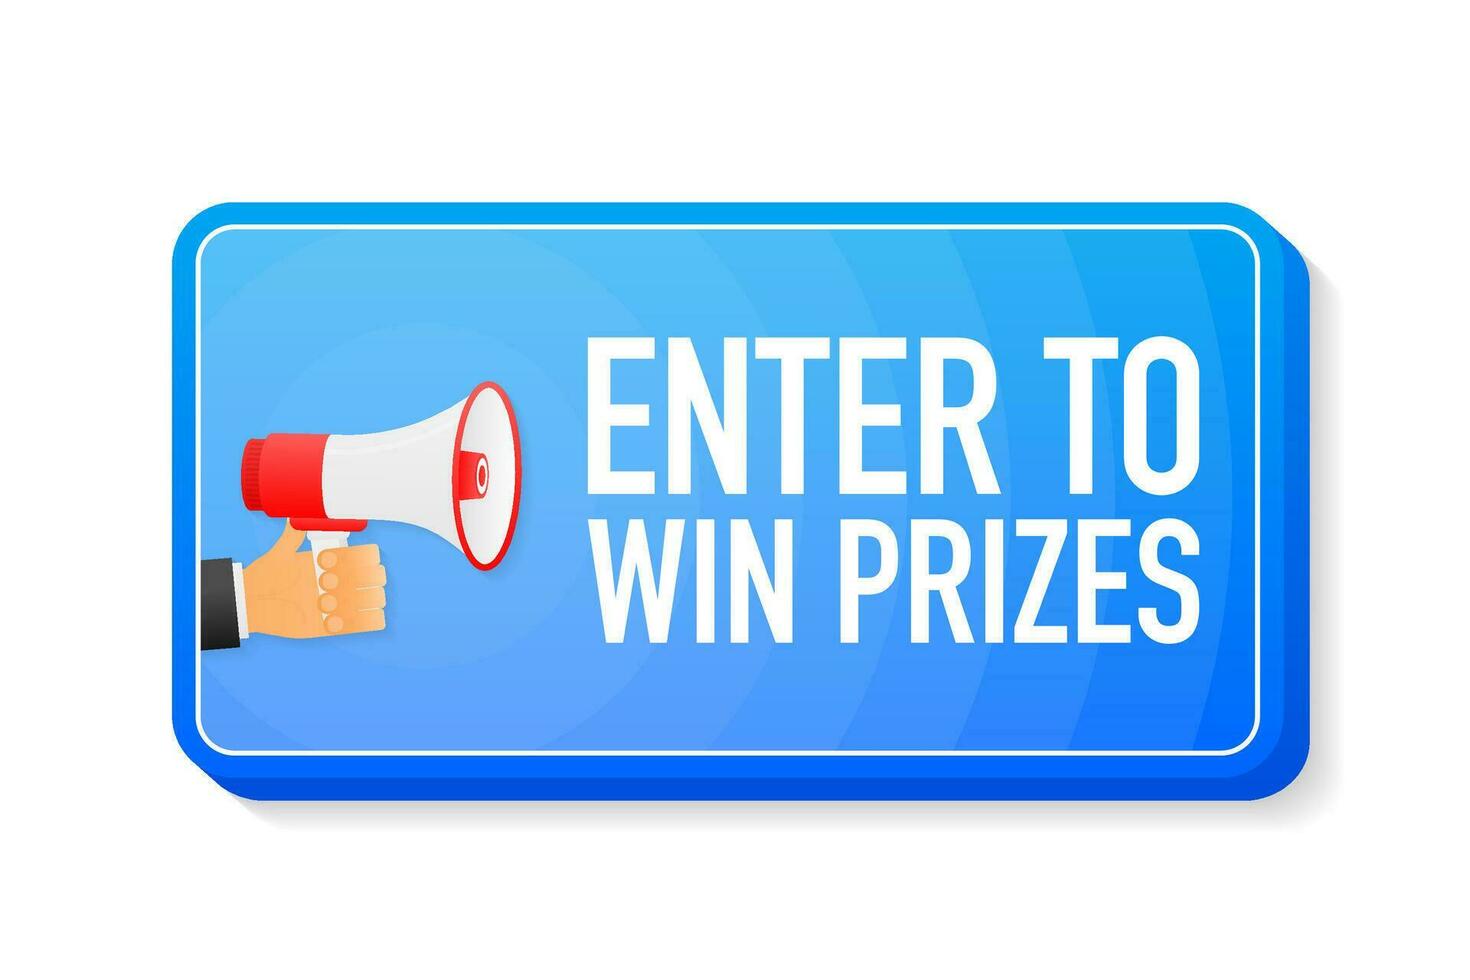 Enter To Win Prizes megaphone blue banner in 3D style on white background. Hand holds loudspeacker. Vector illustration.